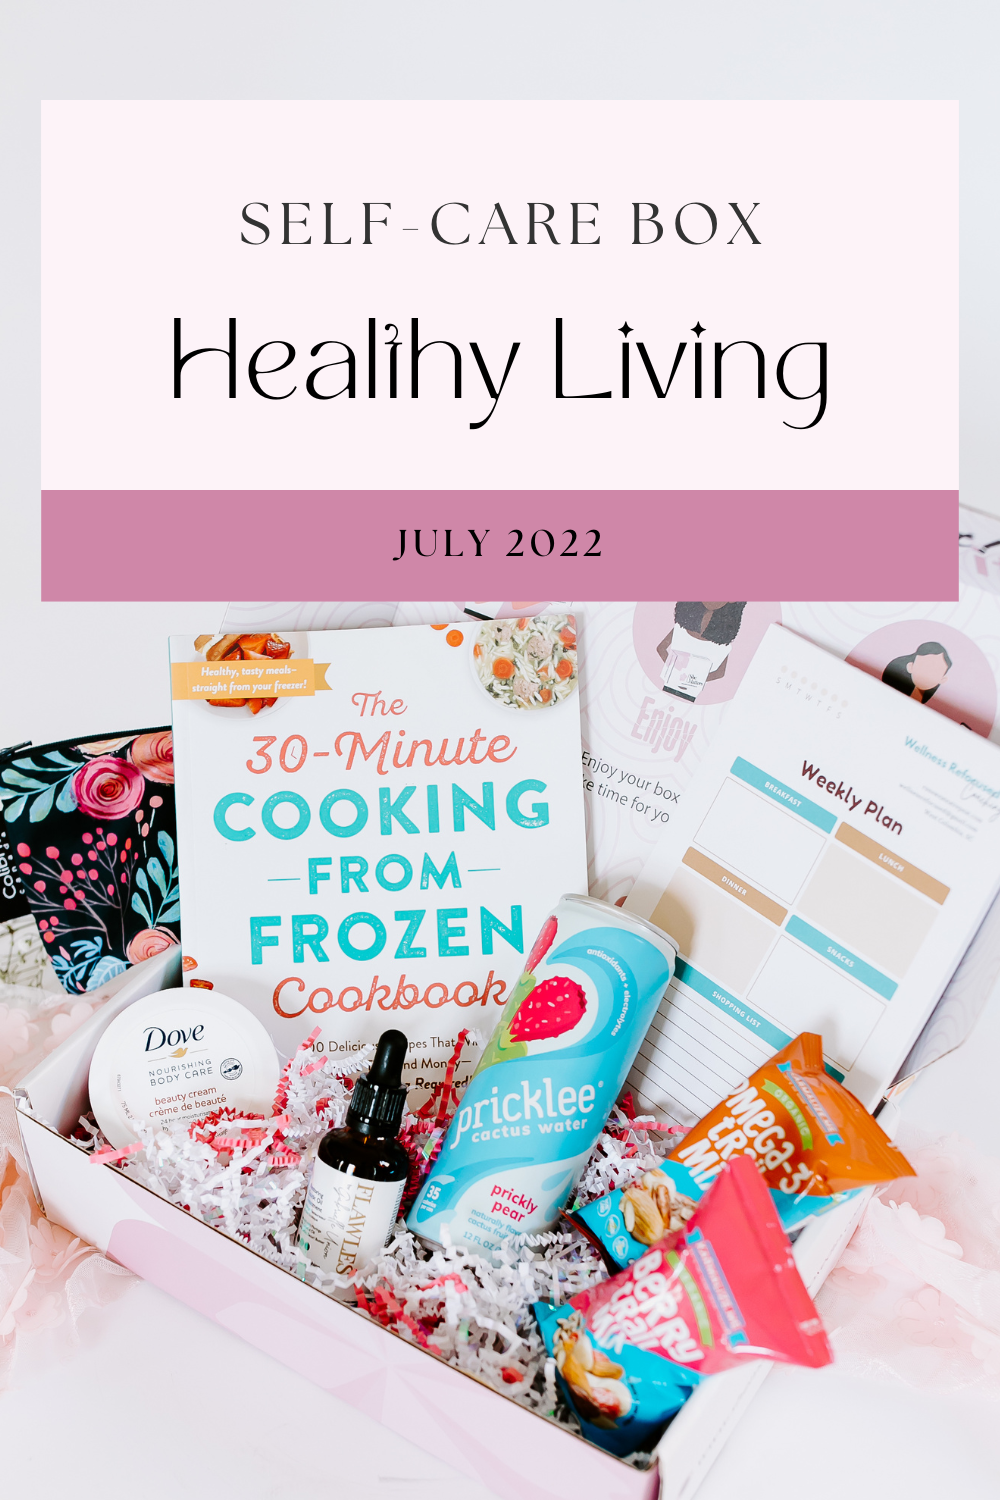 Healthy Living Self-Care Box